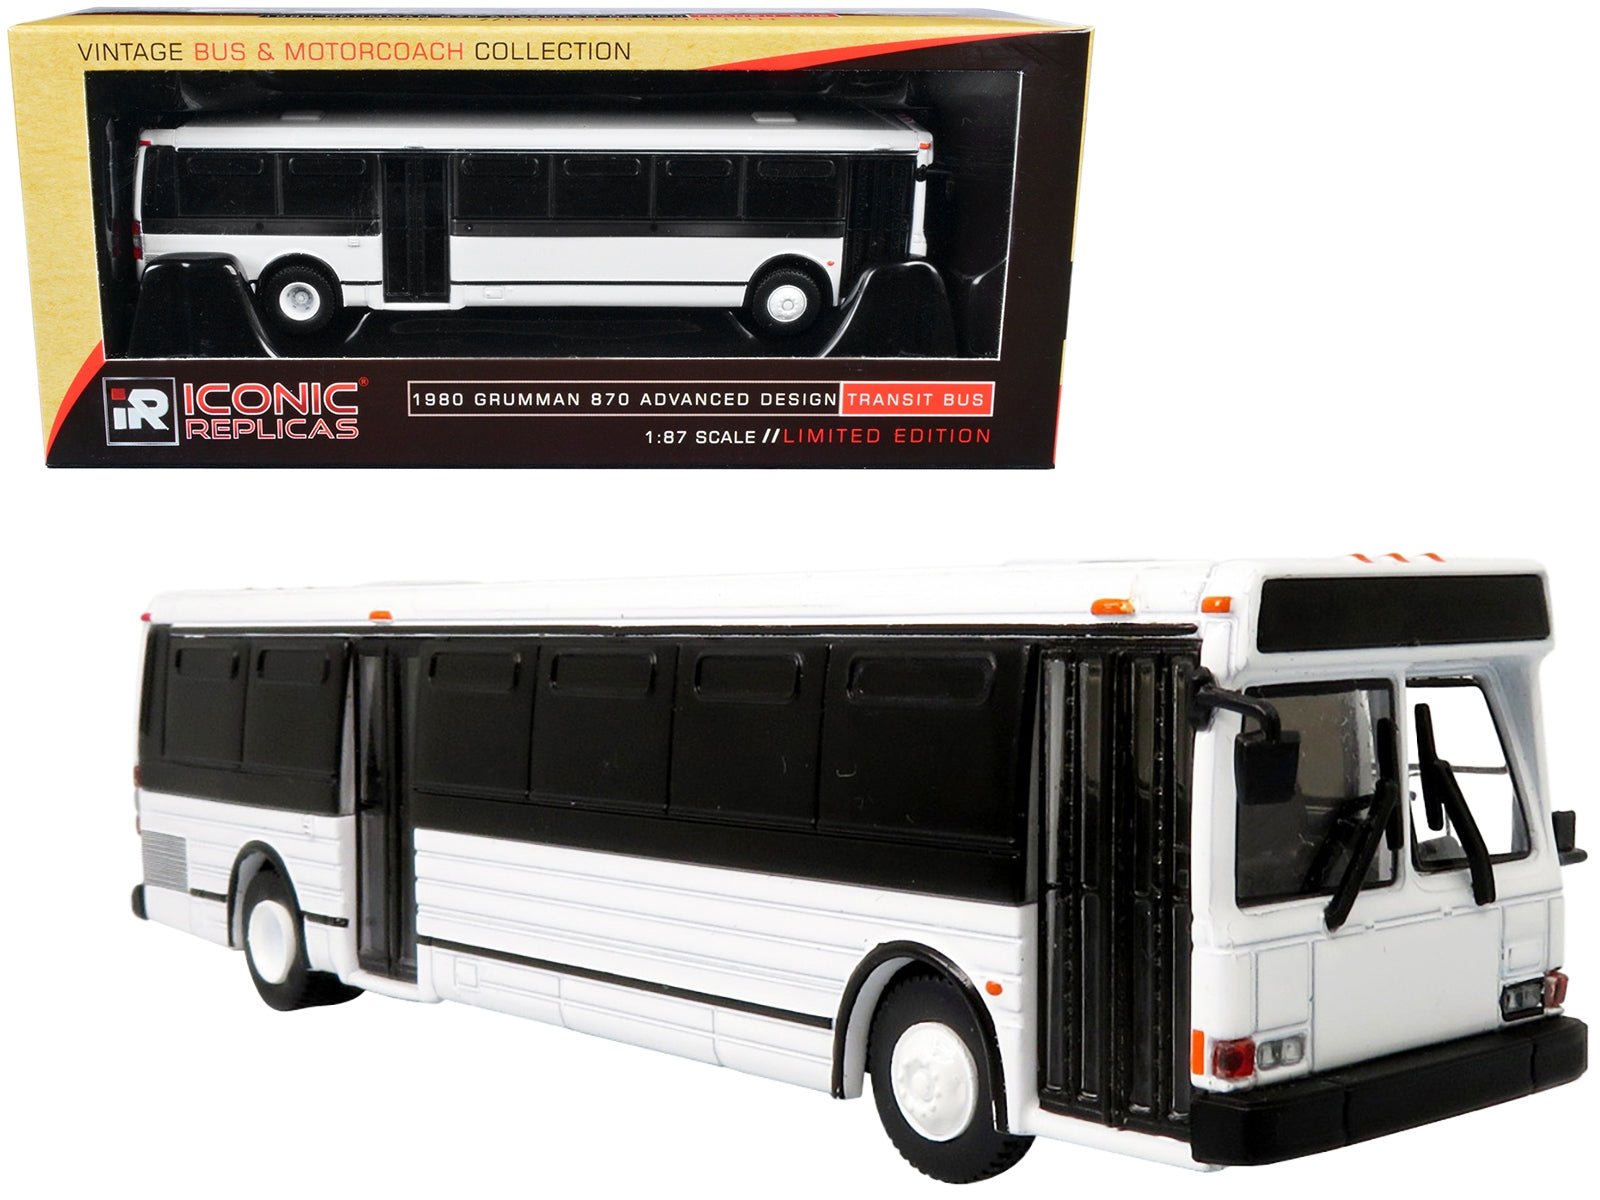 1980 Grumman 870 Advanced Design Transit Bus Plain White "Vintage Bus & Motorcoach Collection" 1/87 Diecast Model by Iconic Replicas Iconic Replicas